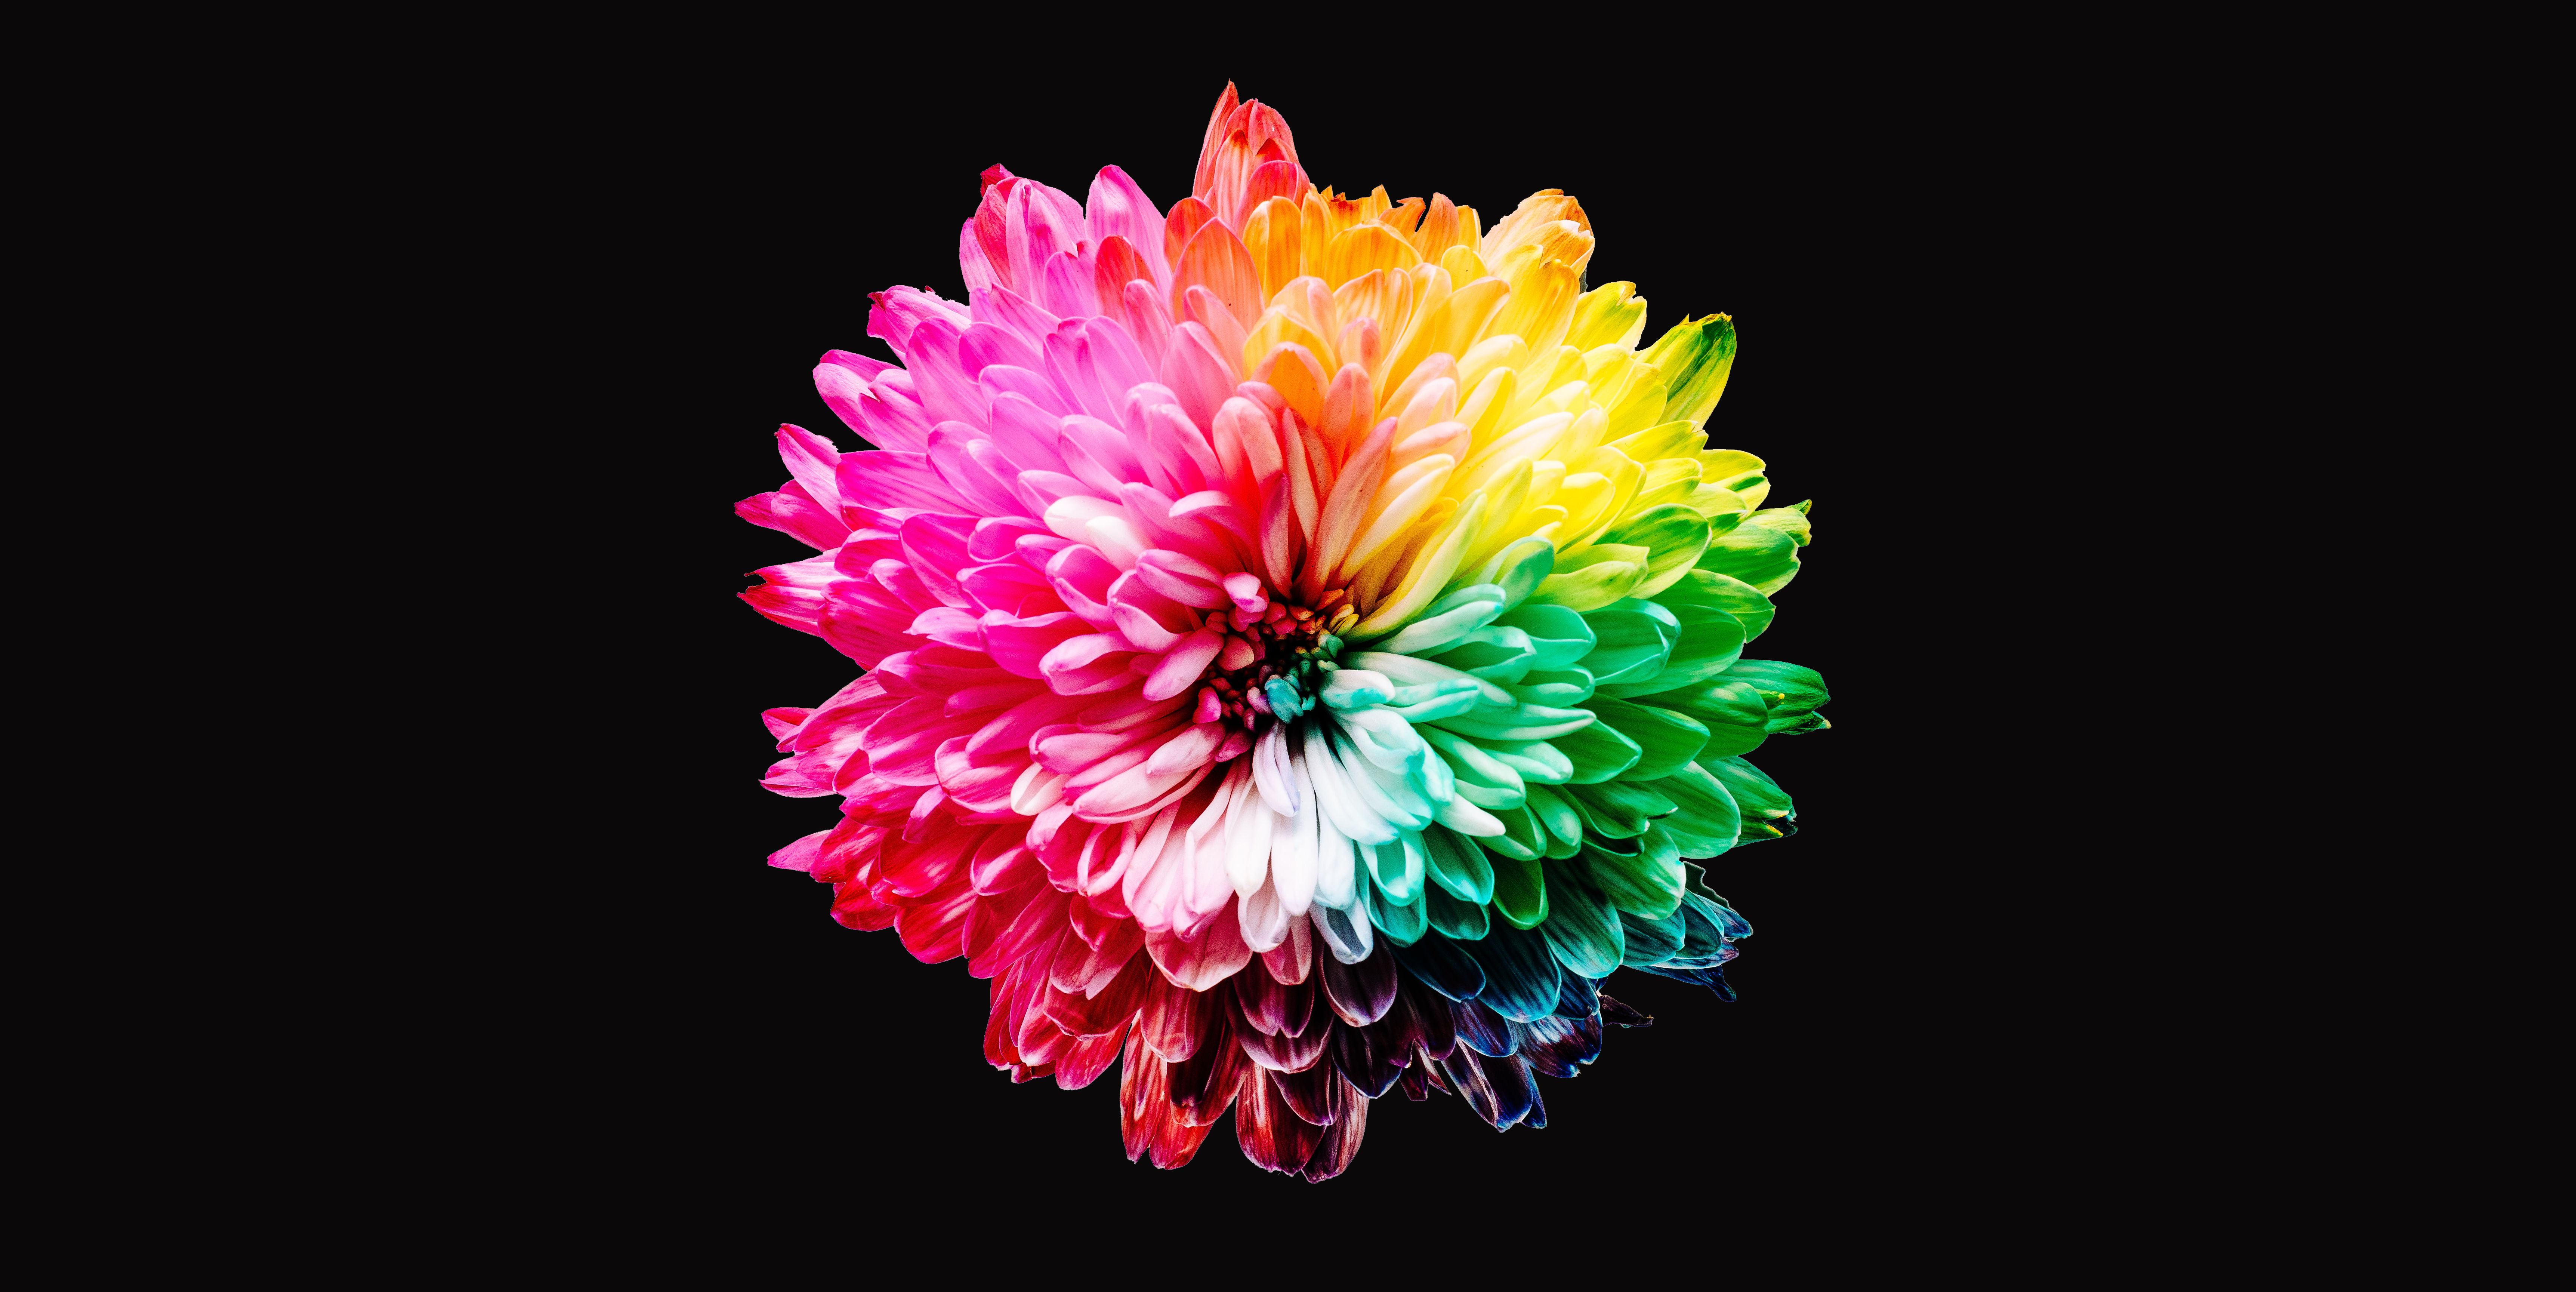 Colorful flowers 4K Wallpaper, Multicolor, Black background, 5K, Flowers